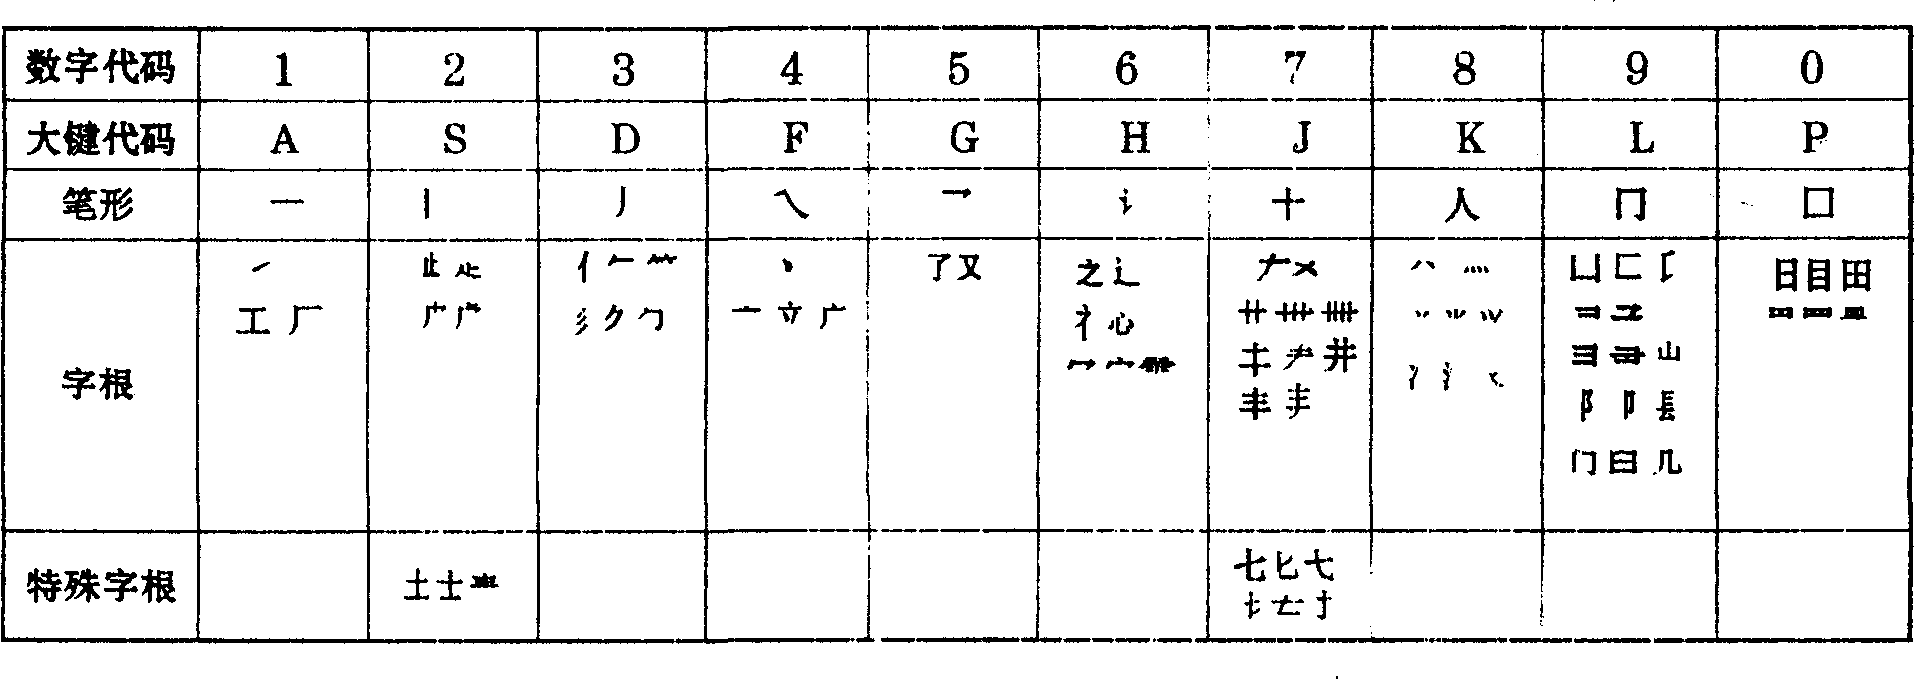 Chinese character input method in digital keys